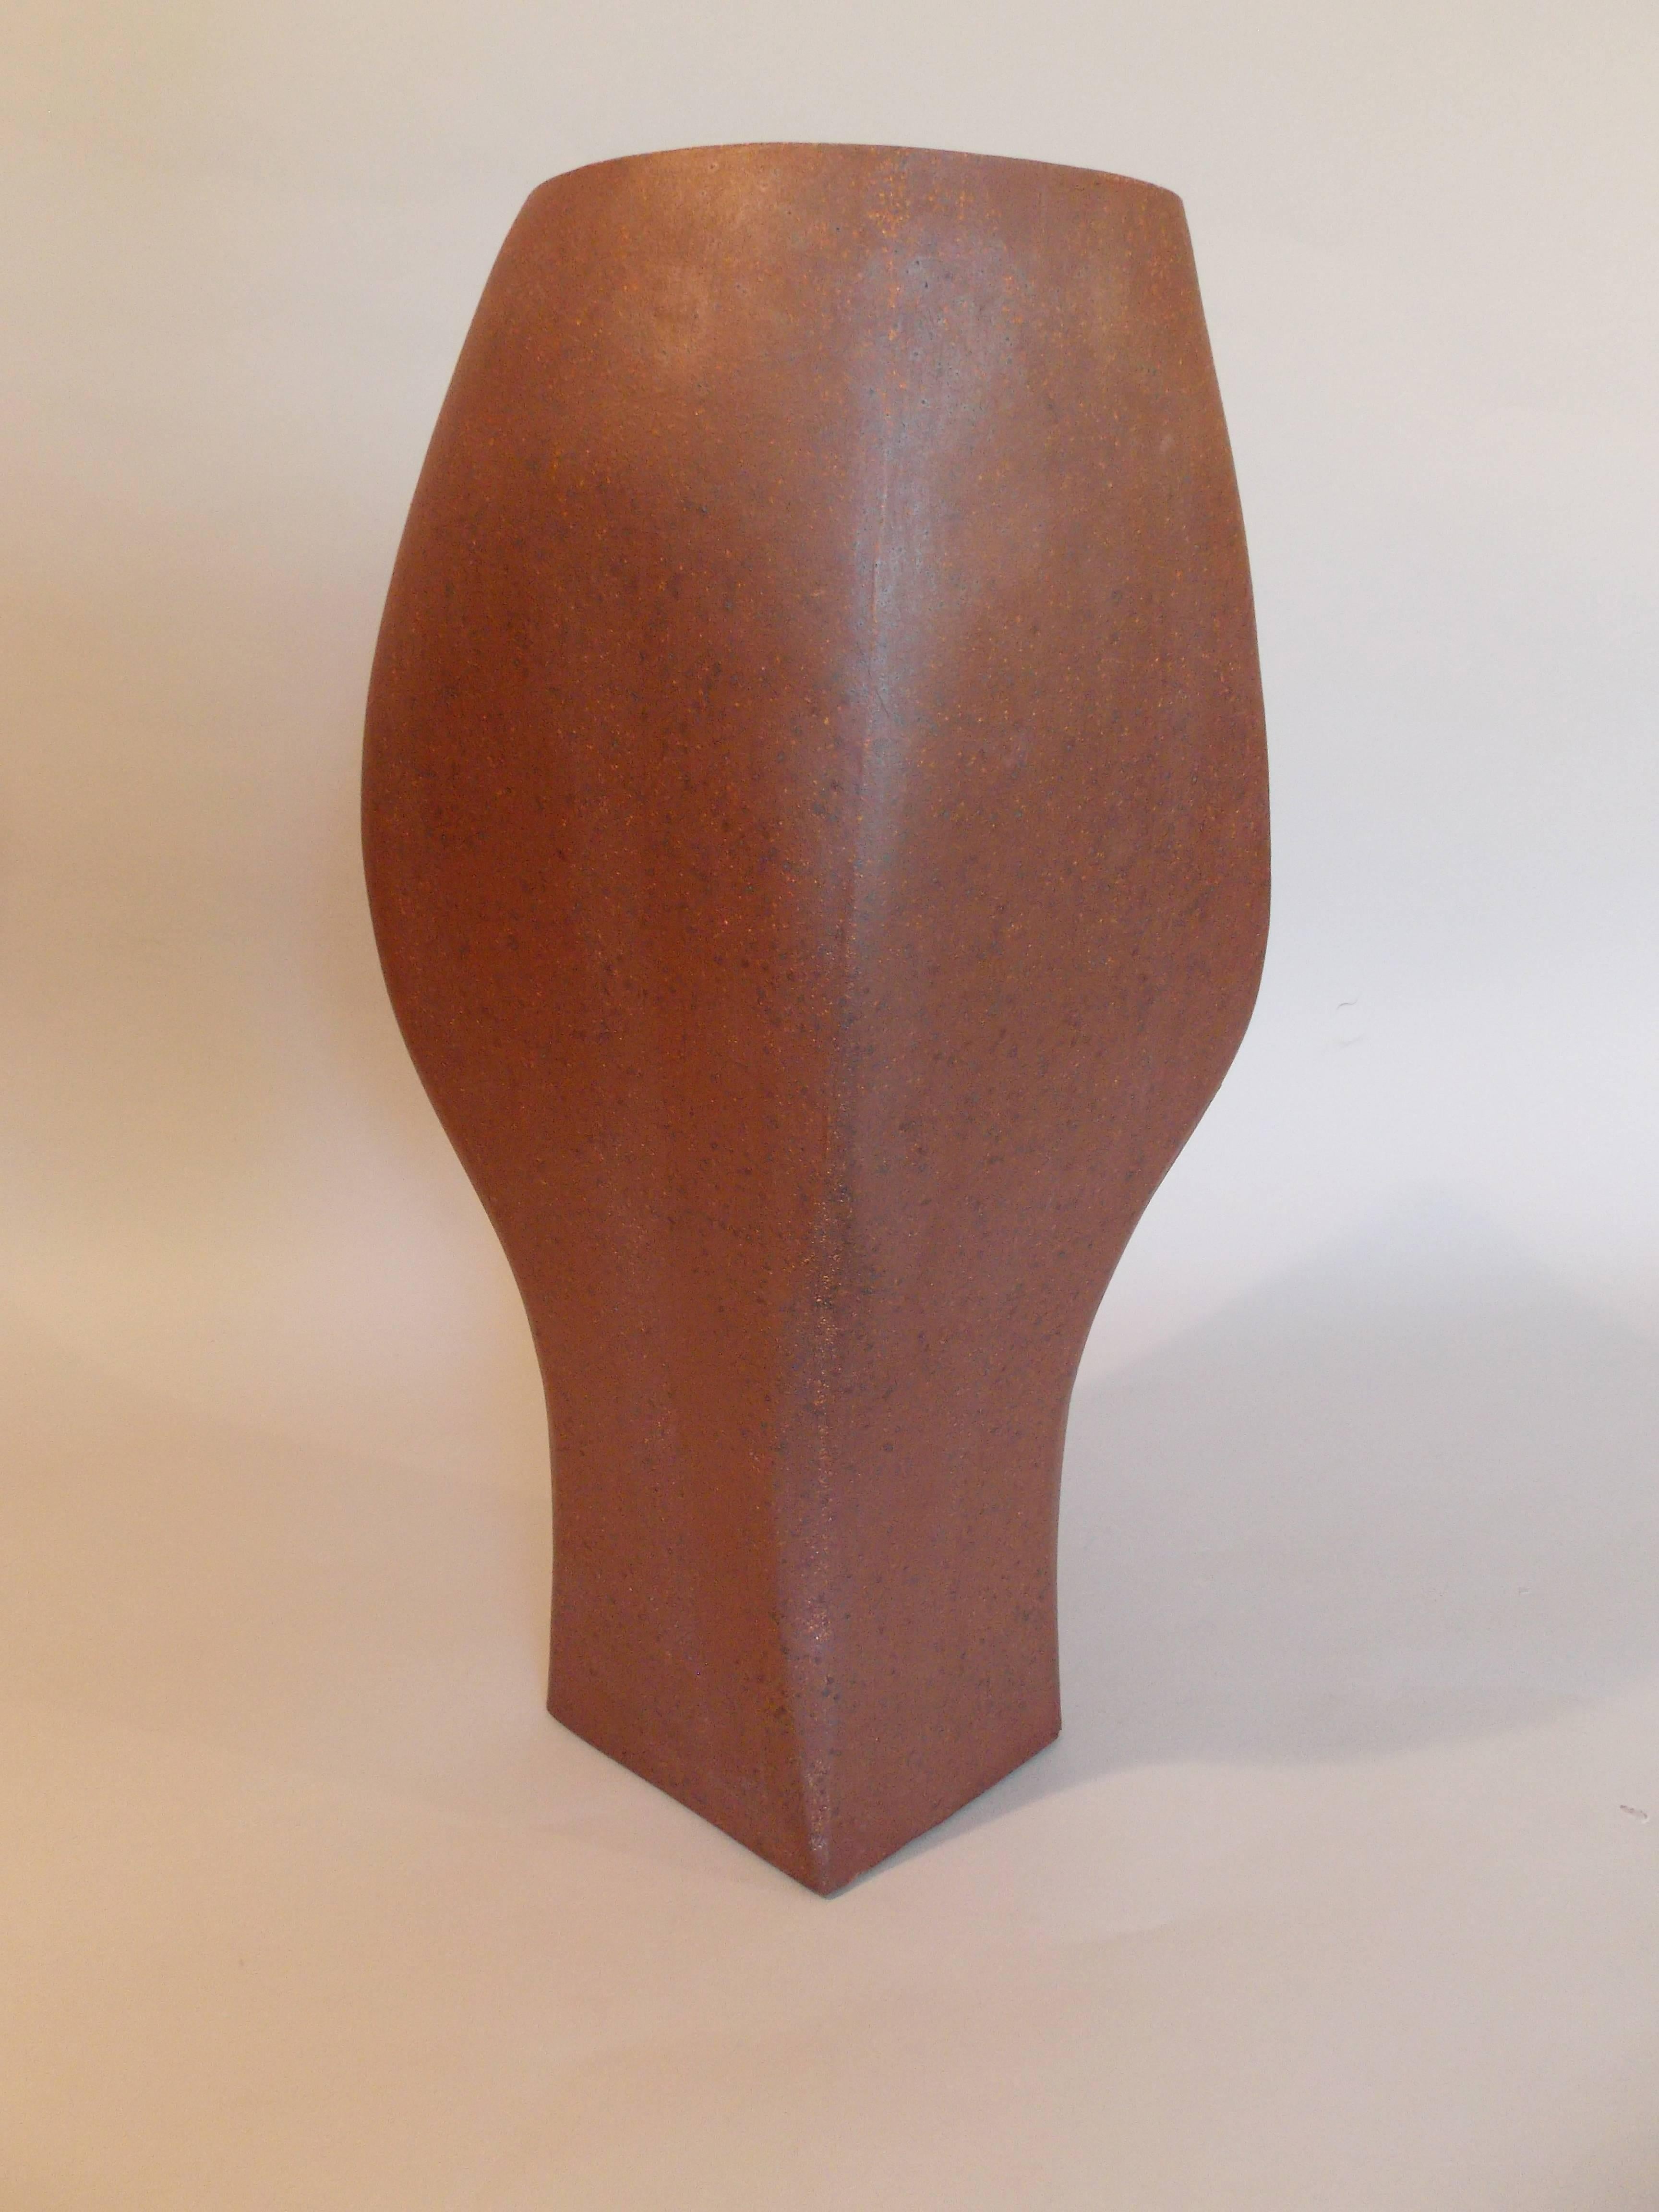 Ceramic David Cressey Sculptural Planter or Vase